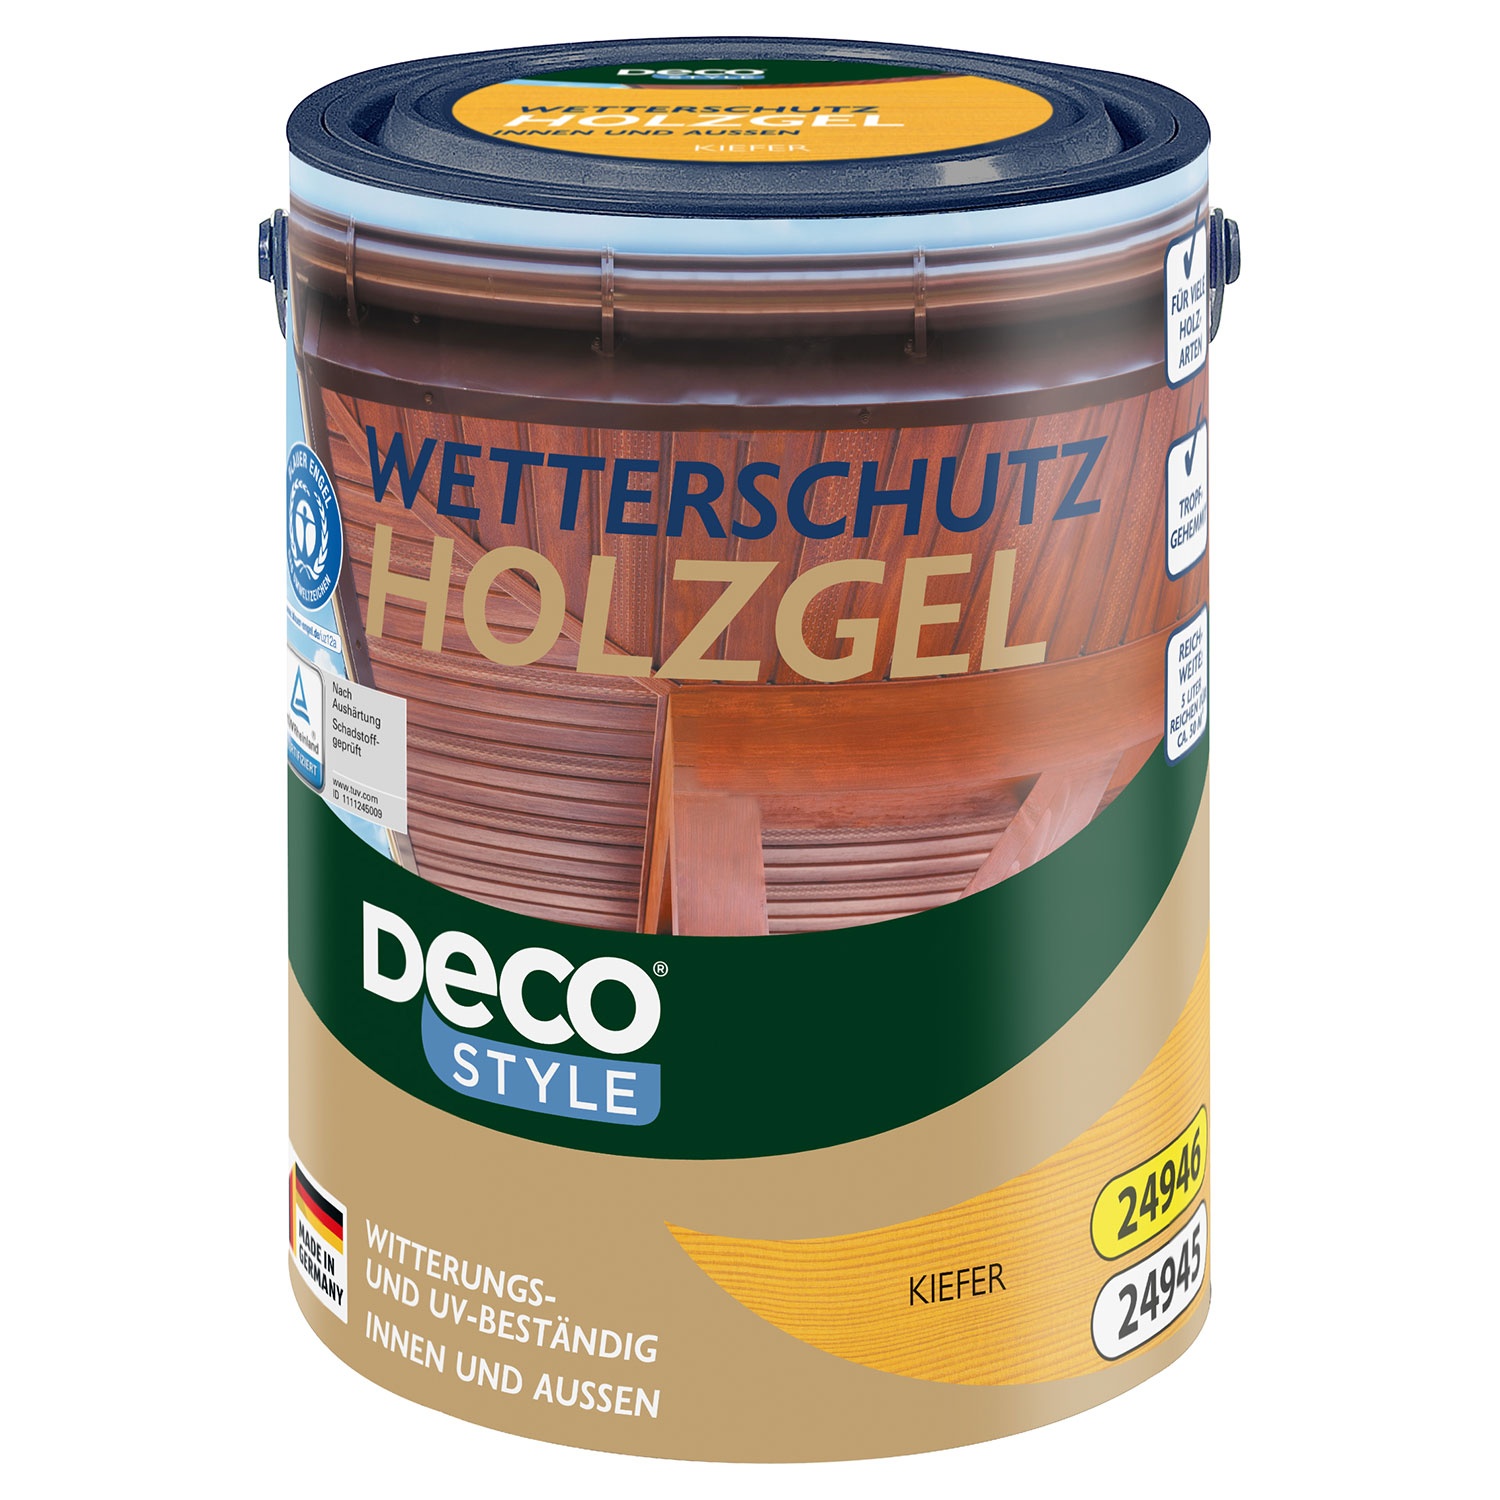 DECO STYLE® Wetterschutz-Holzgel 5 l